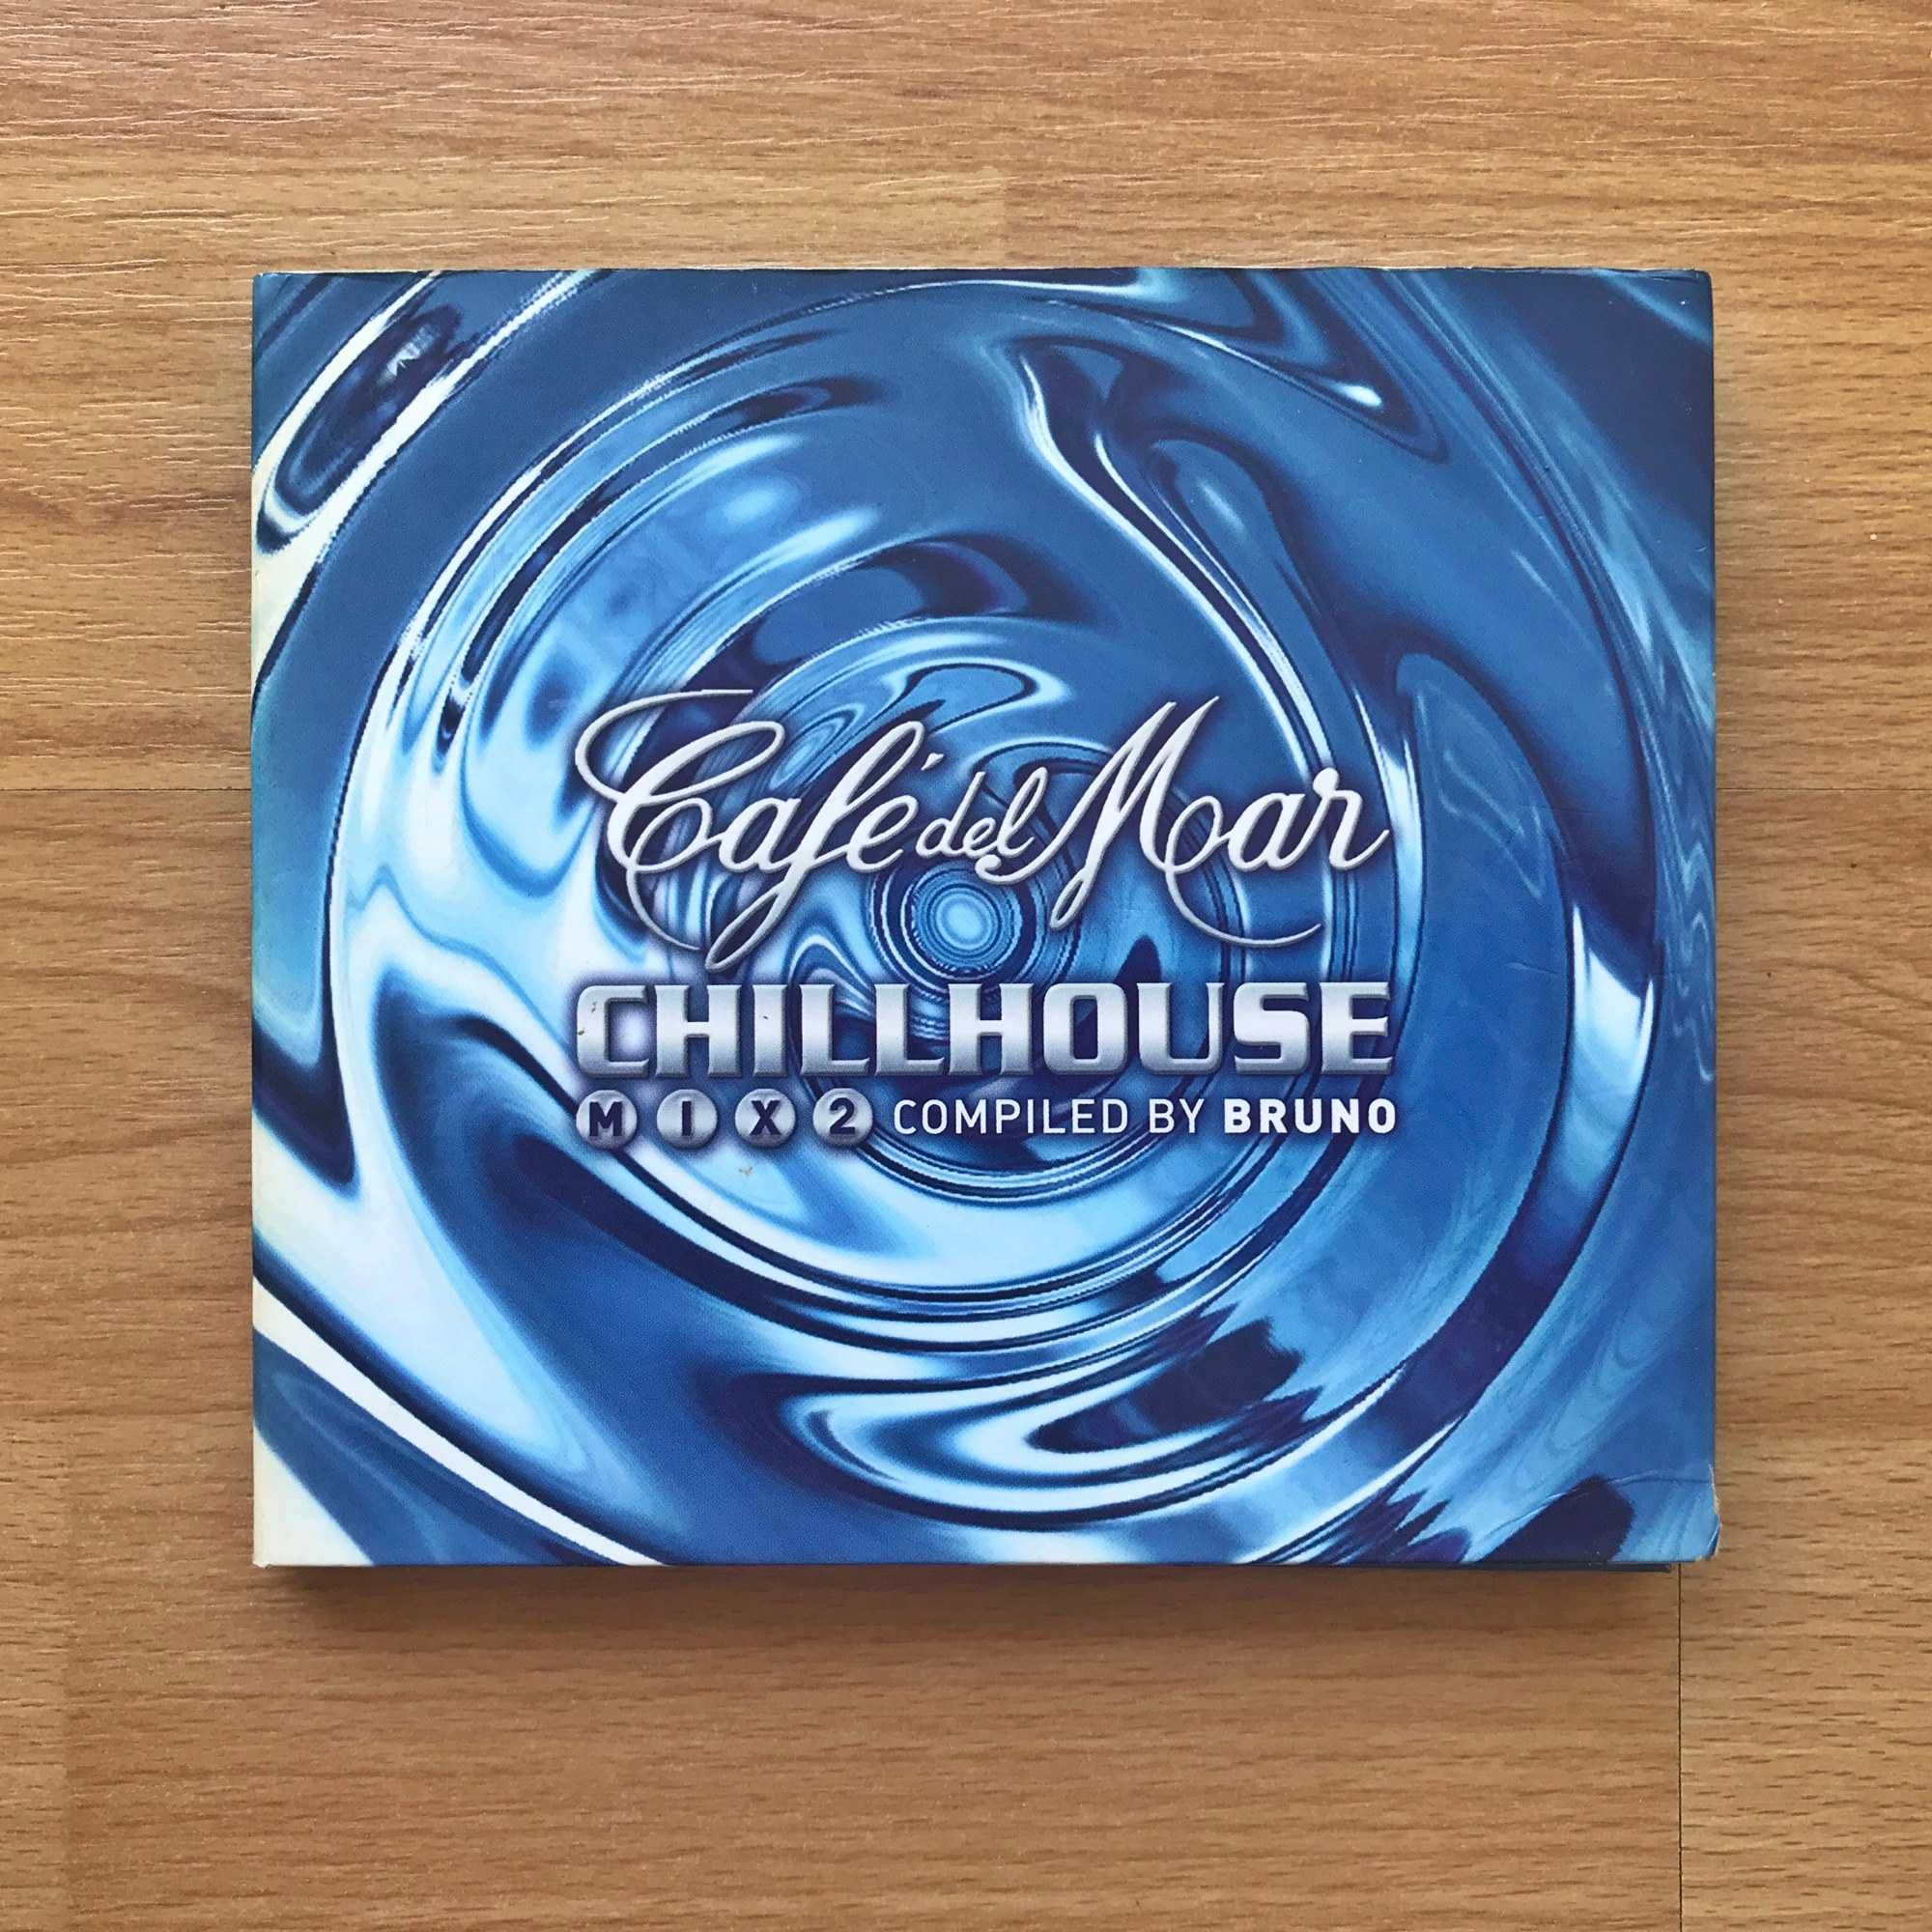 Discos anos 80 / 90 Café del Mar Chillhouse mix Kaos Dj Vibe Numero 1